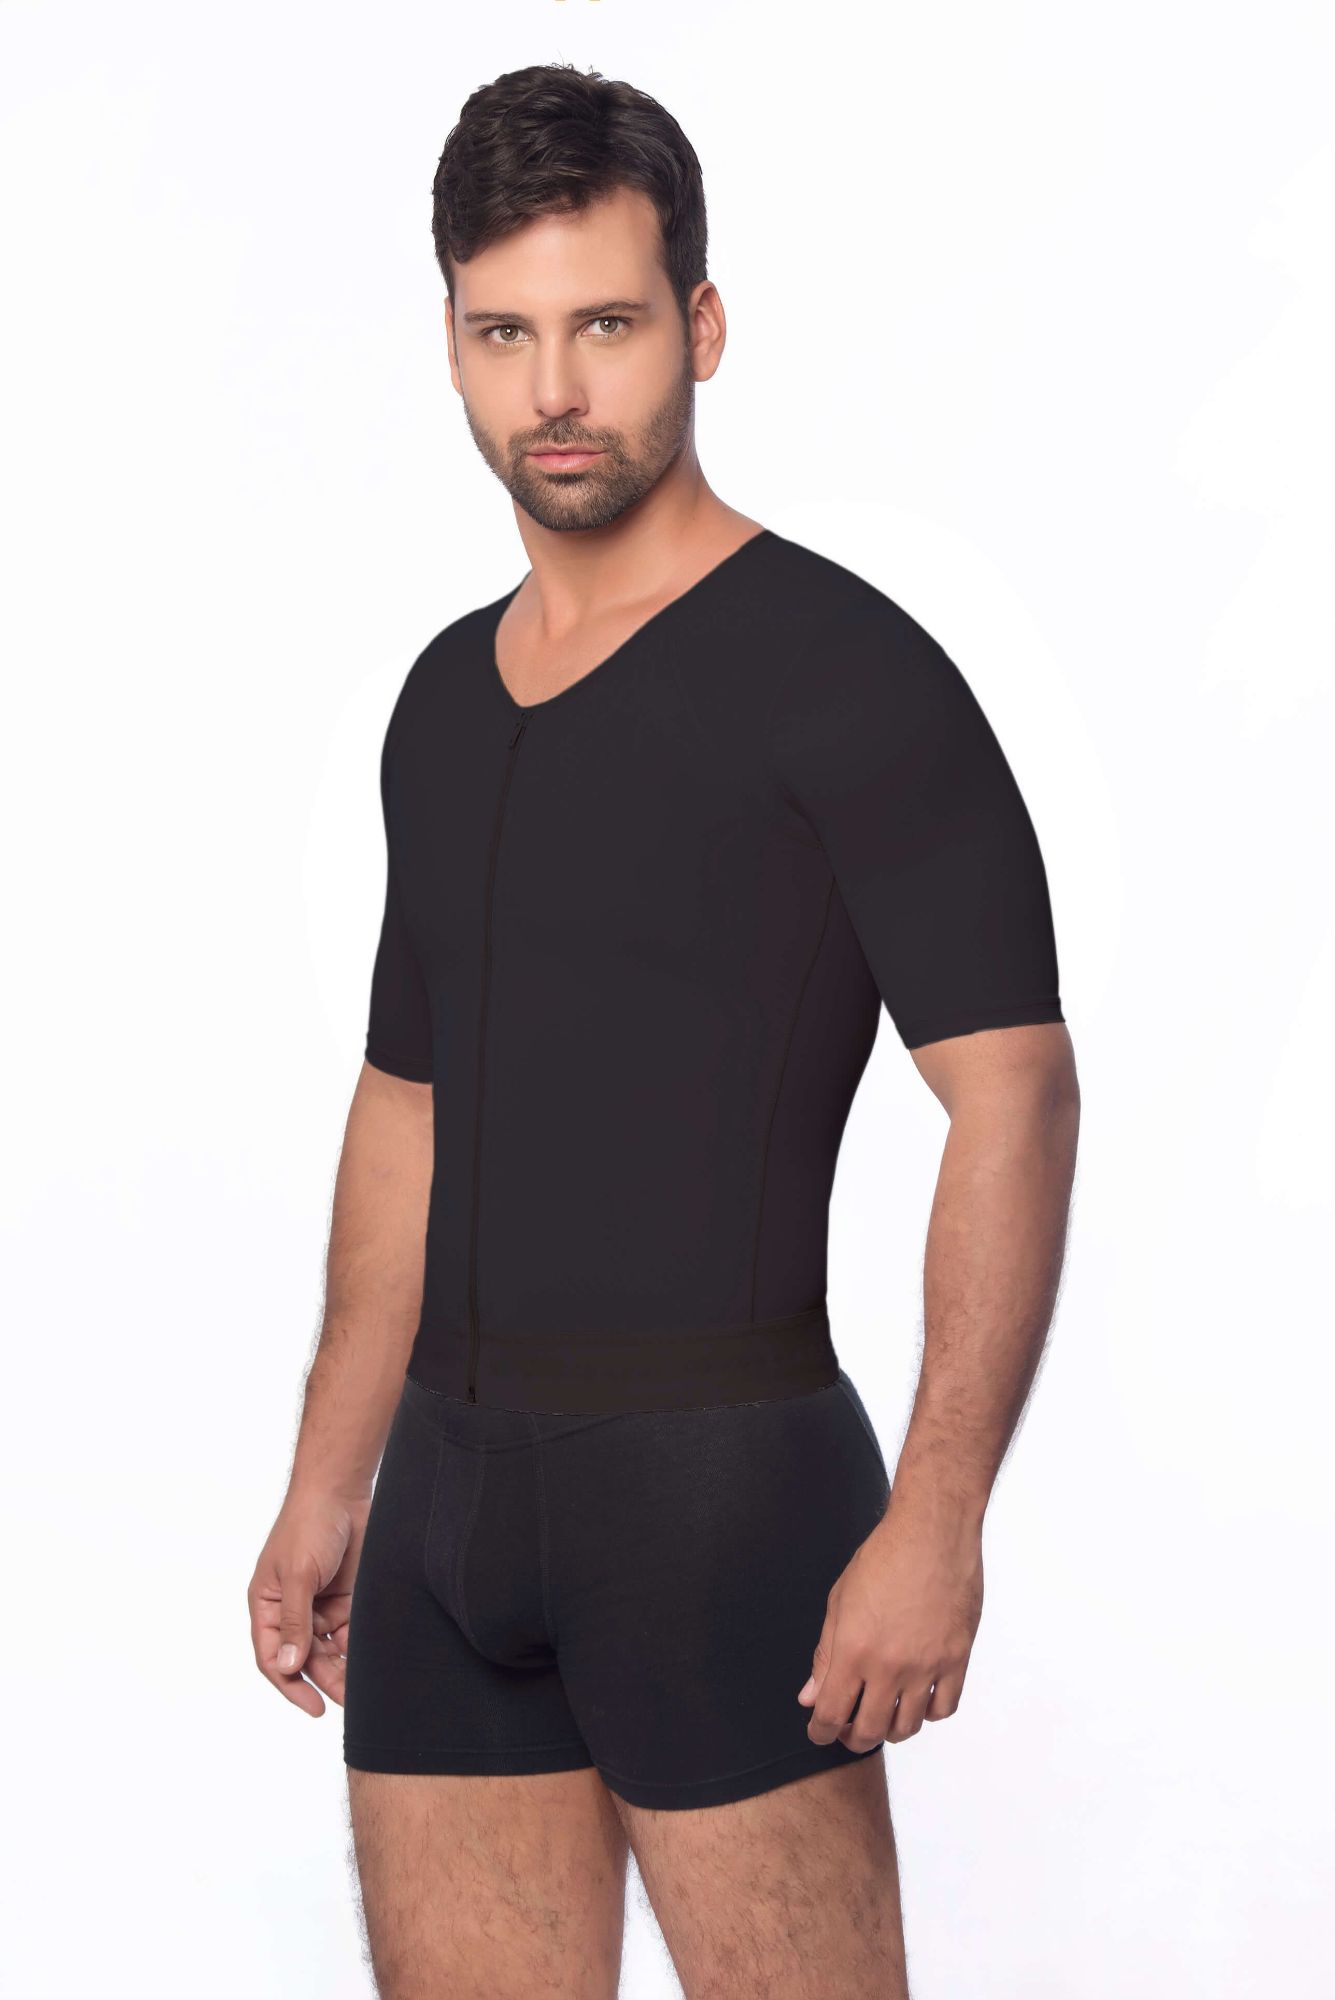 black-male-vest-with-sleeves-3 - Contour Fajas